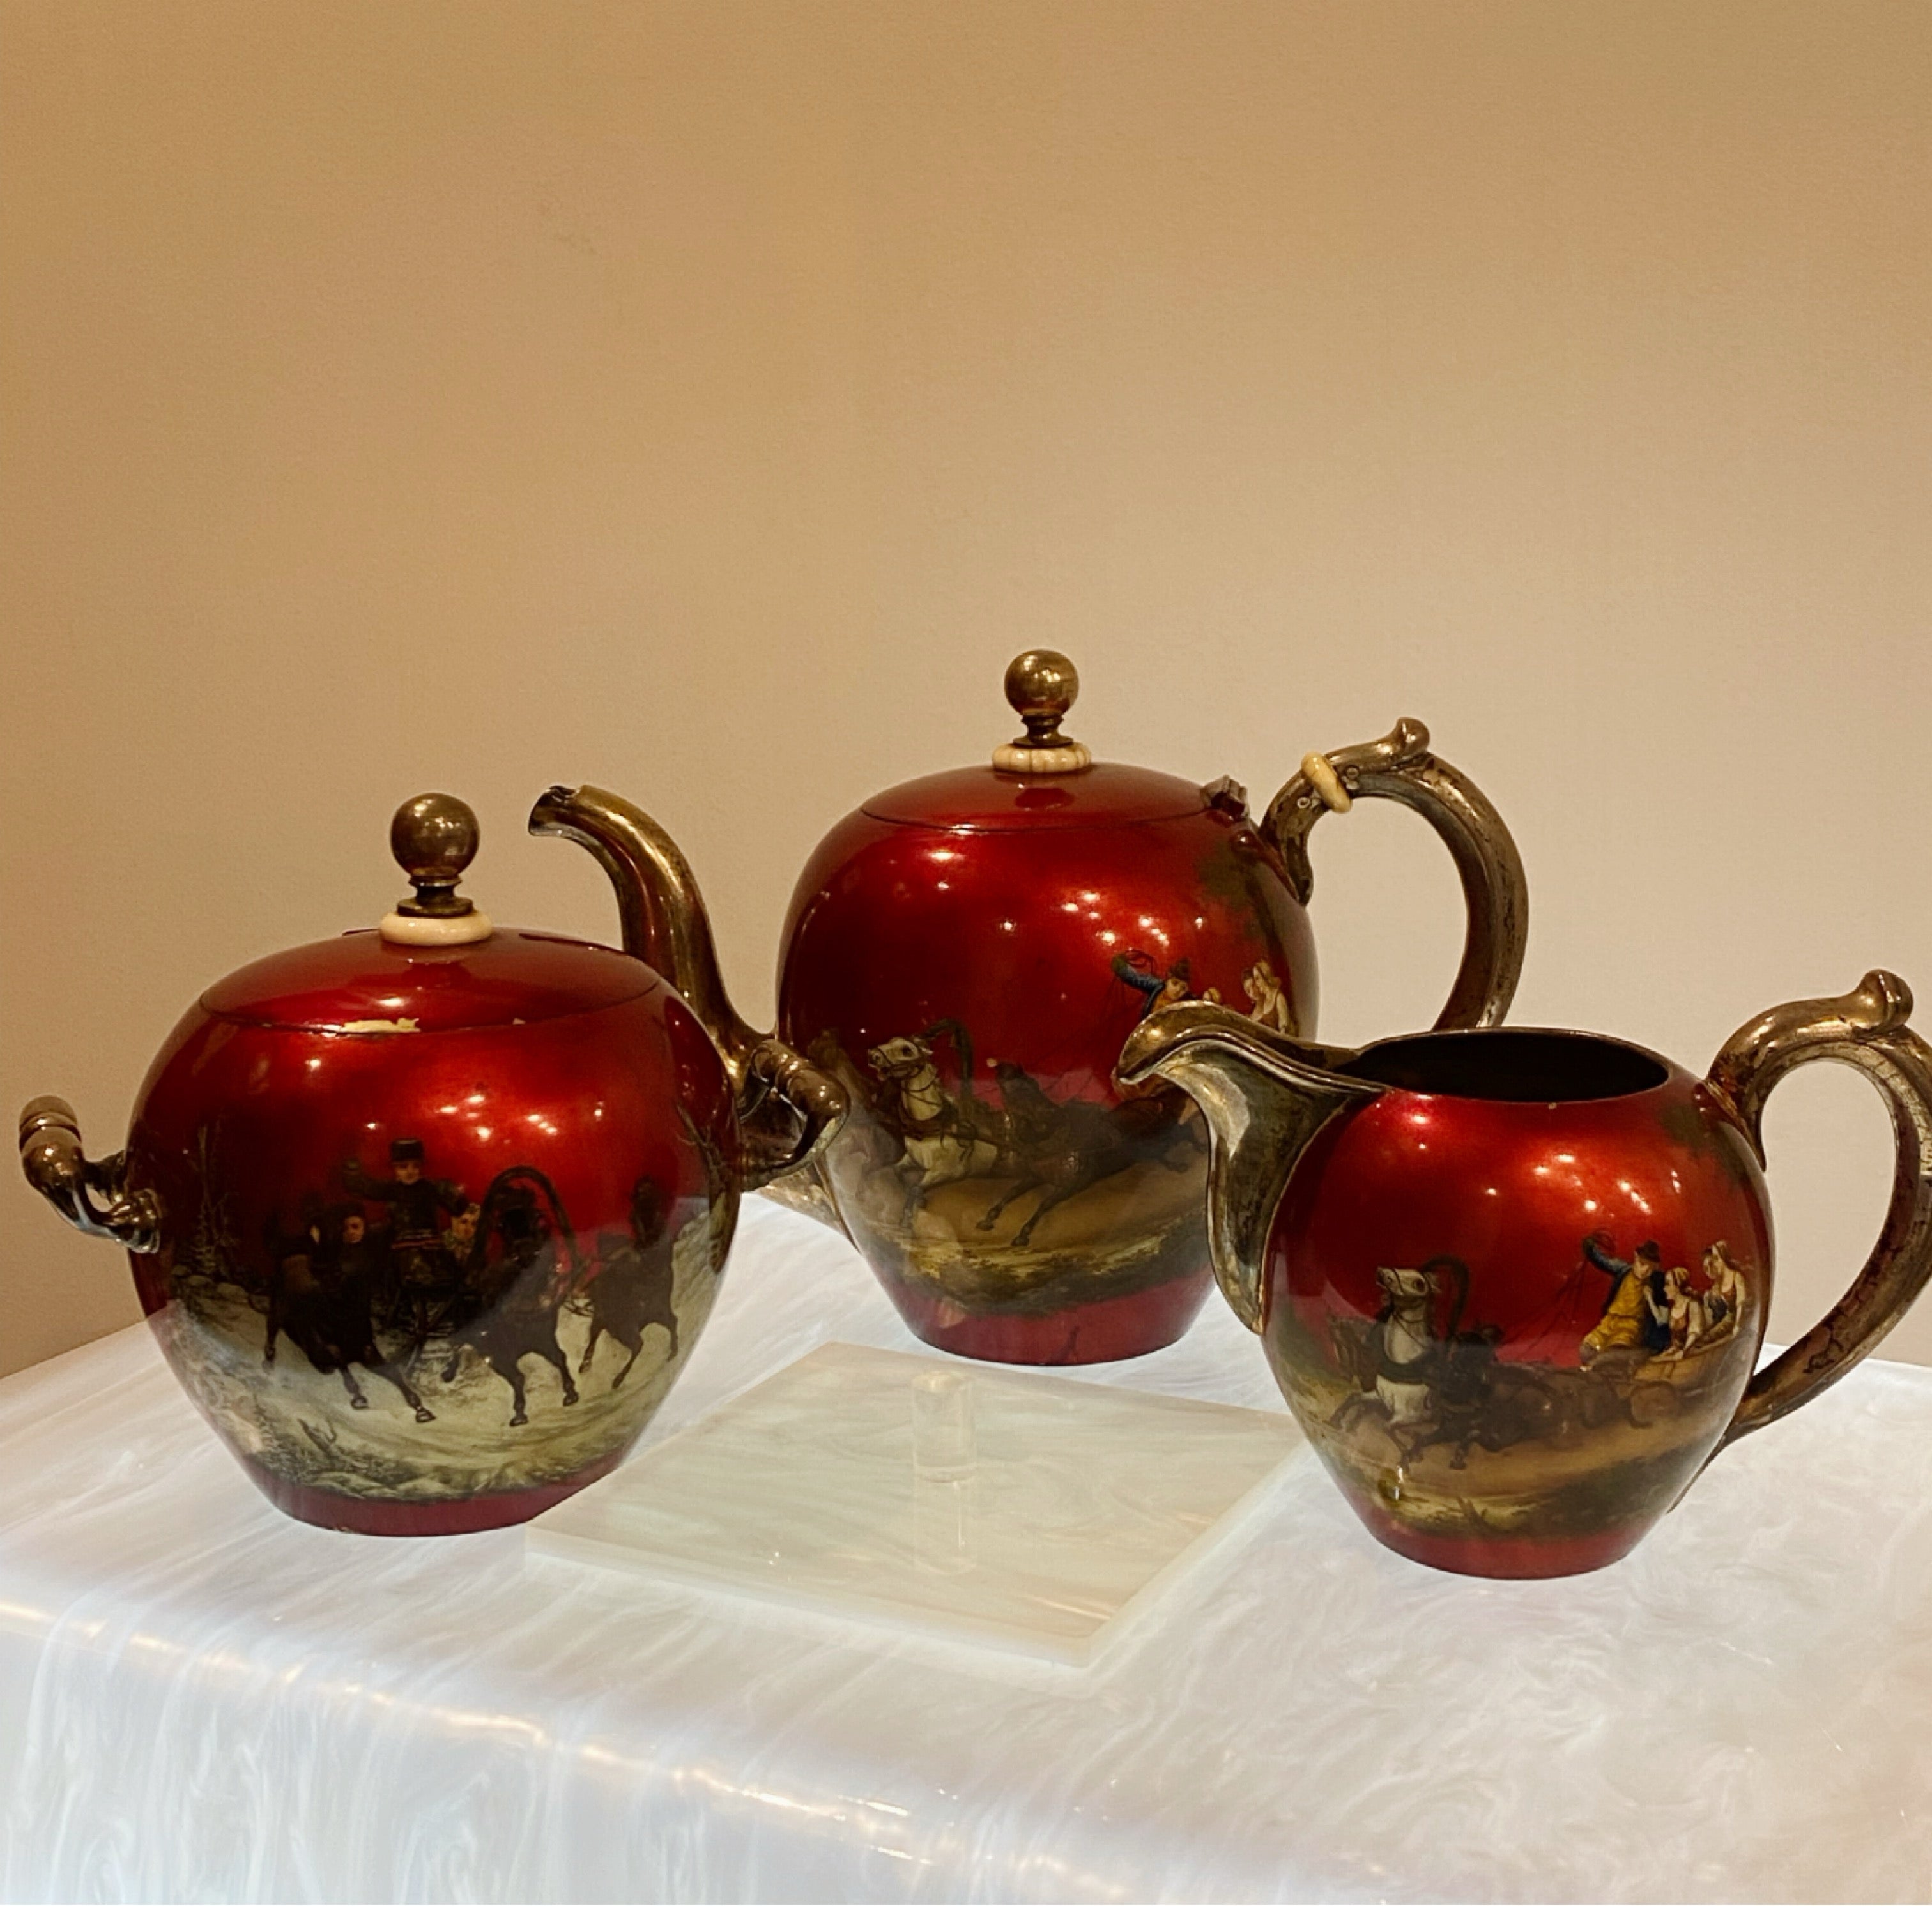 Imperial Russia c1895 Silver/Enamel Tea Set “Seasons” by I. Morozov, Kvetkovsky For Sale